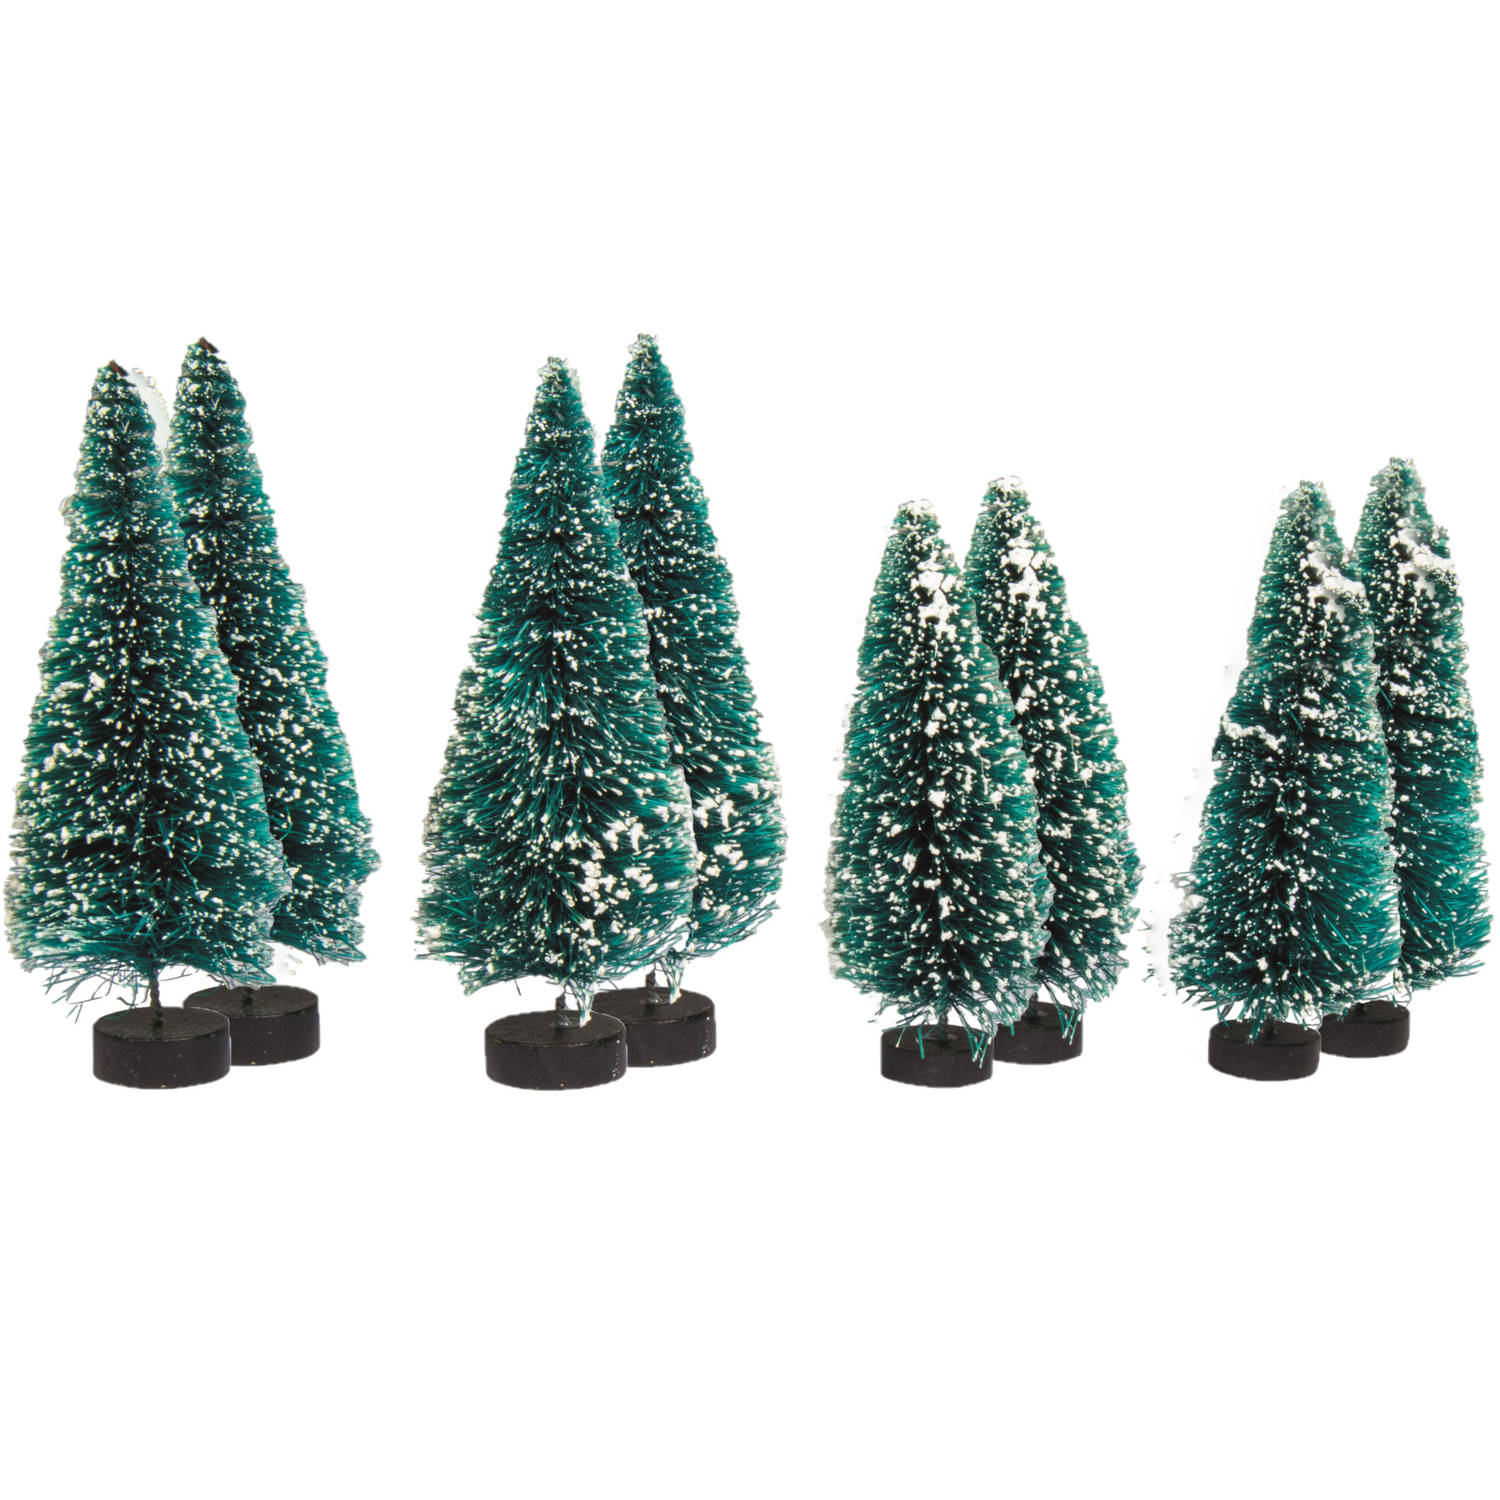 Rayher hobby kerstdorp miniatuur boompjes 8x stuks 9 en 12 cm Kerstdorpen